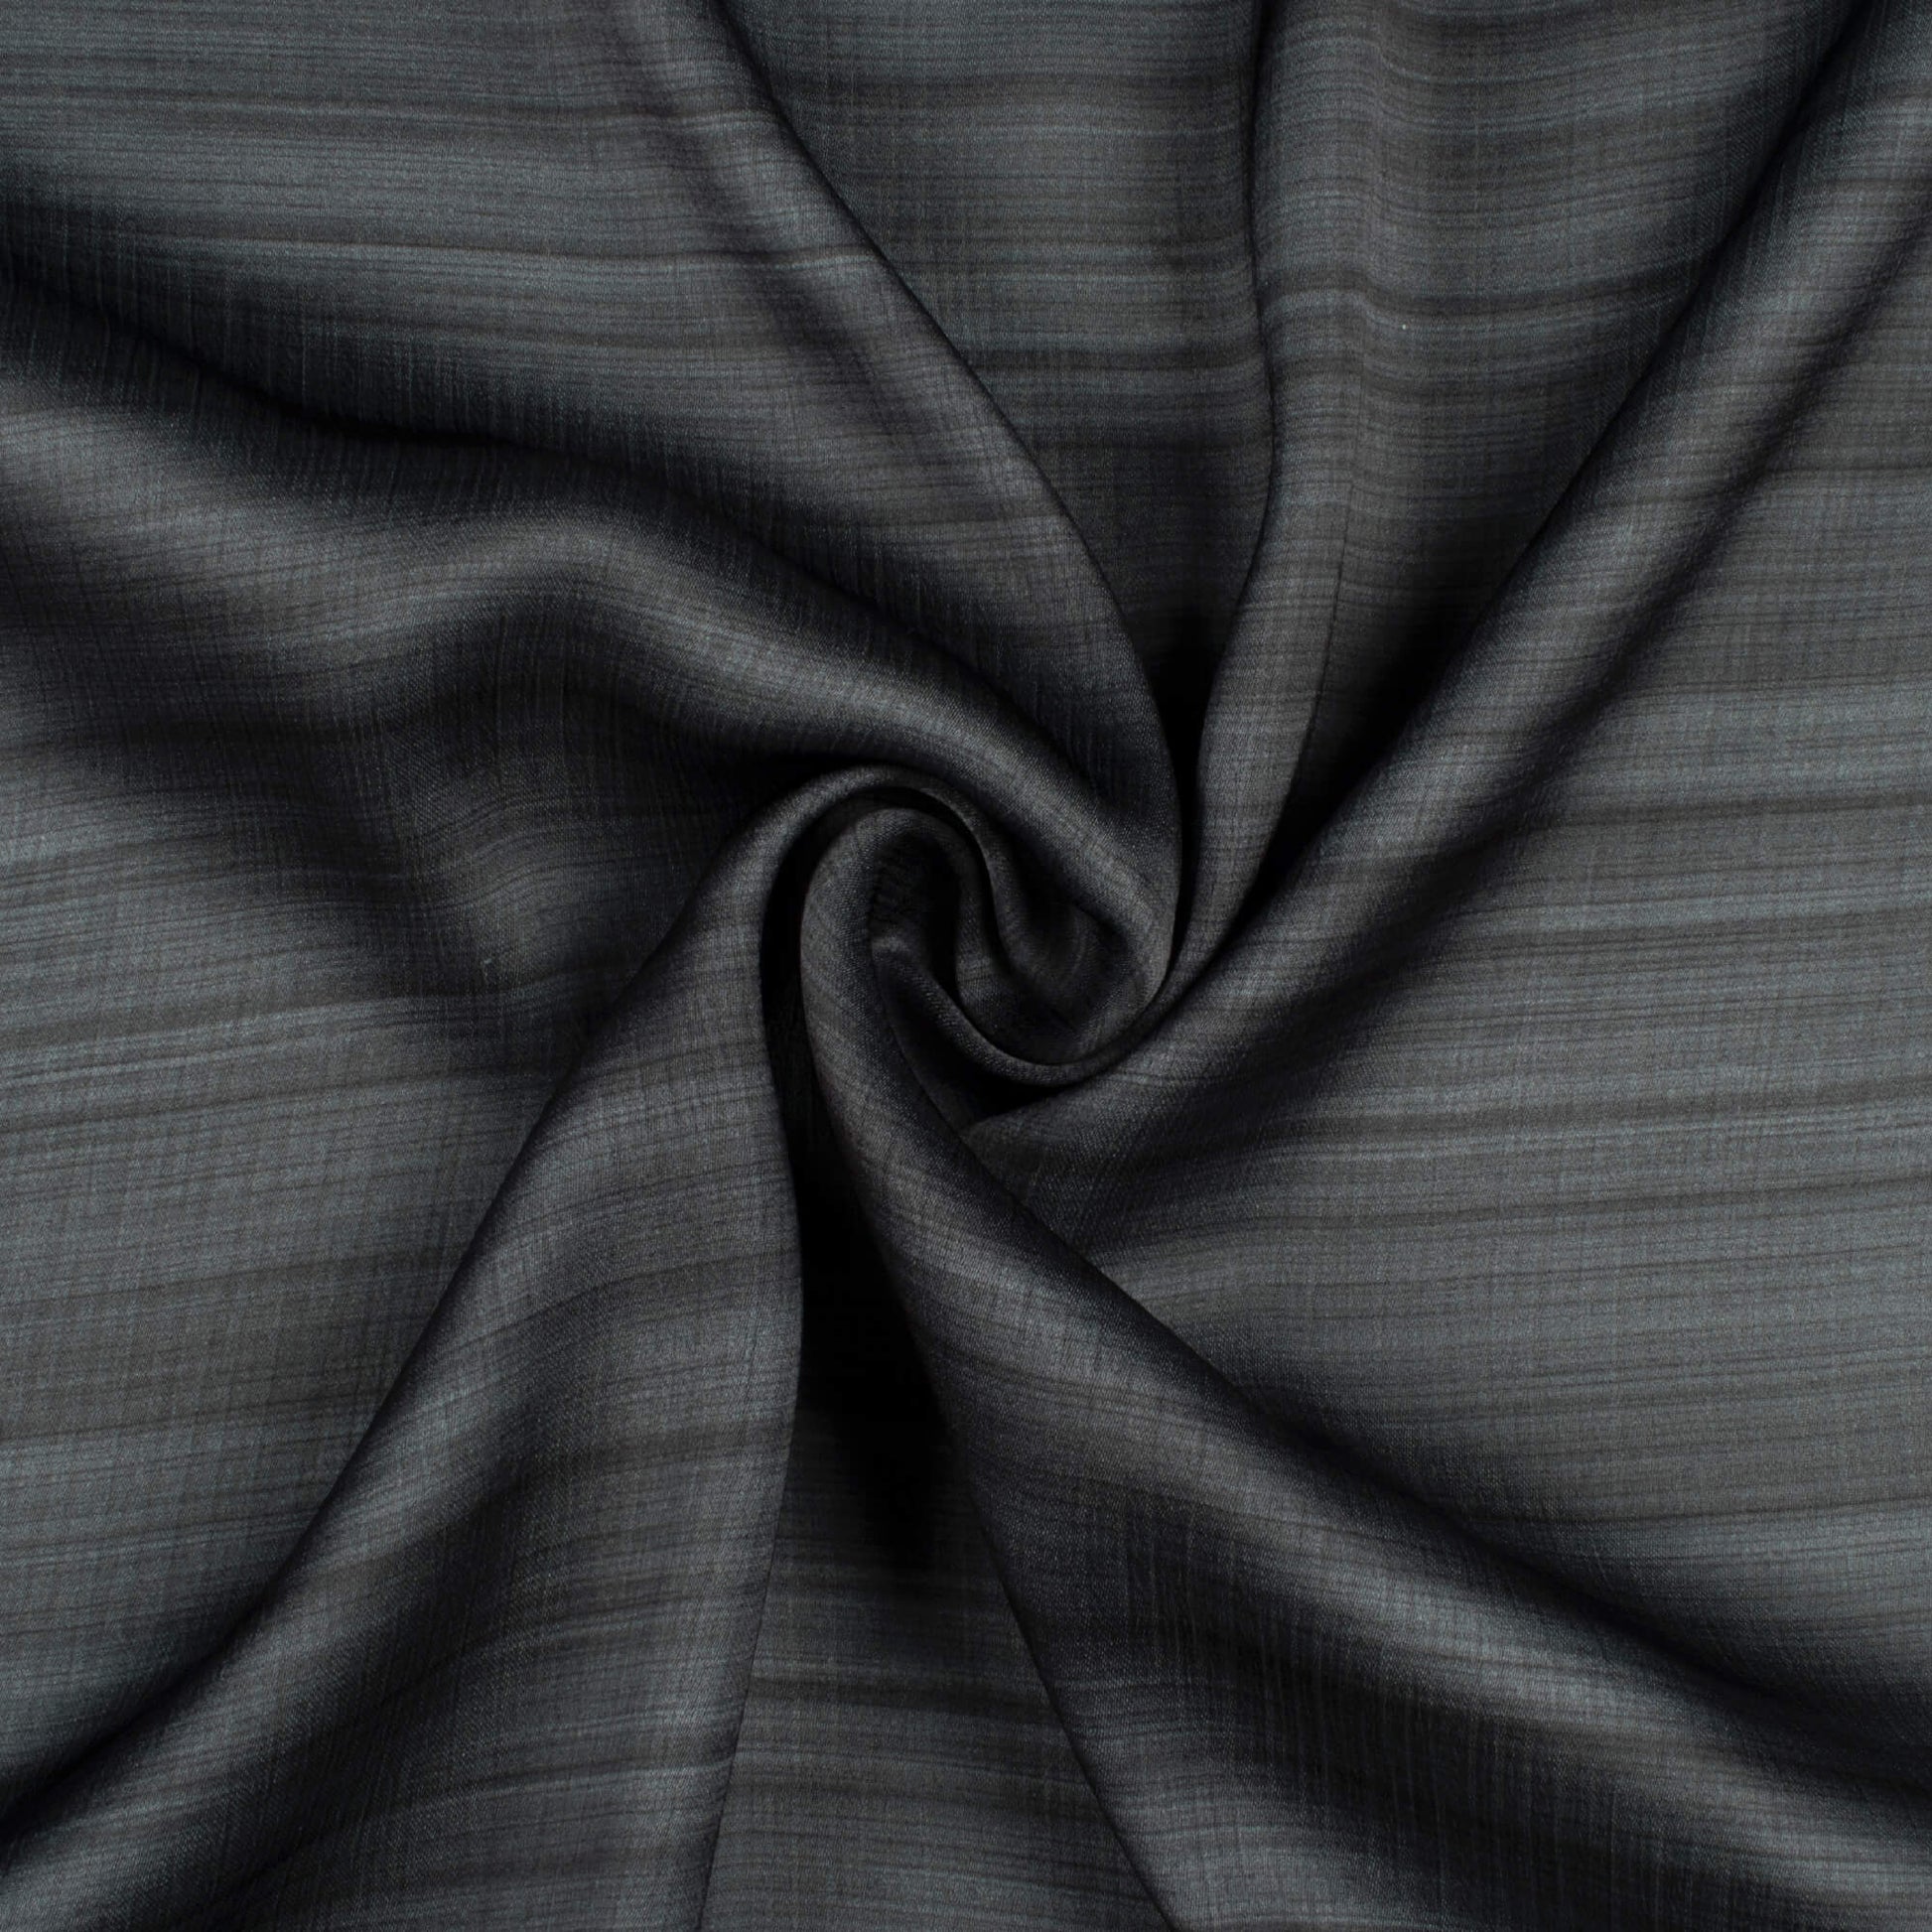 White cotton crinkle chiffon fabric 36 wide